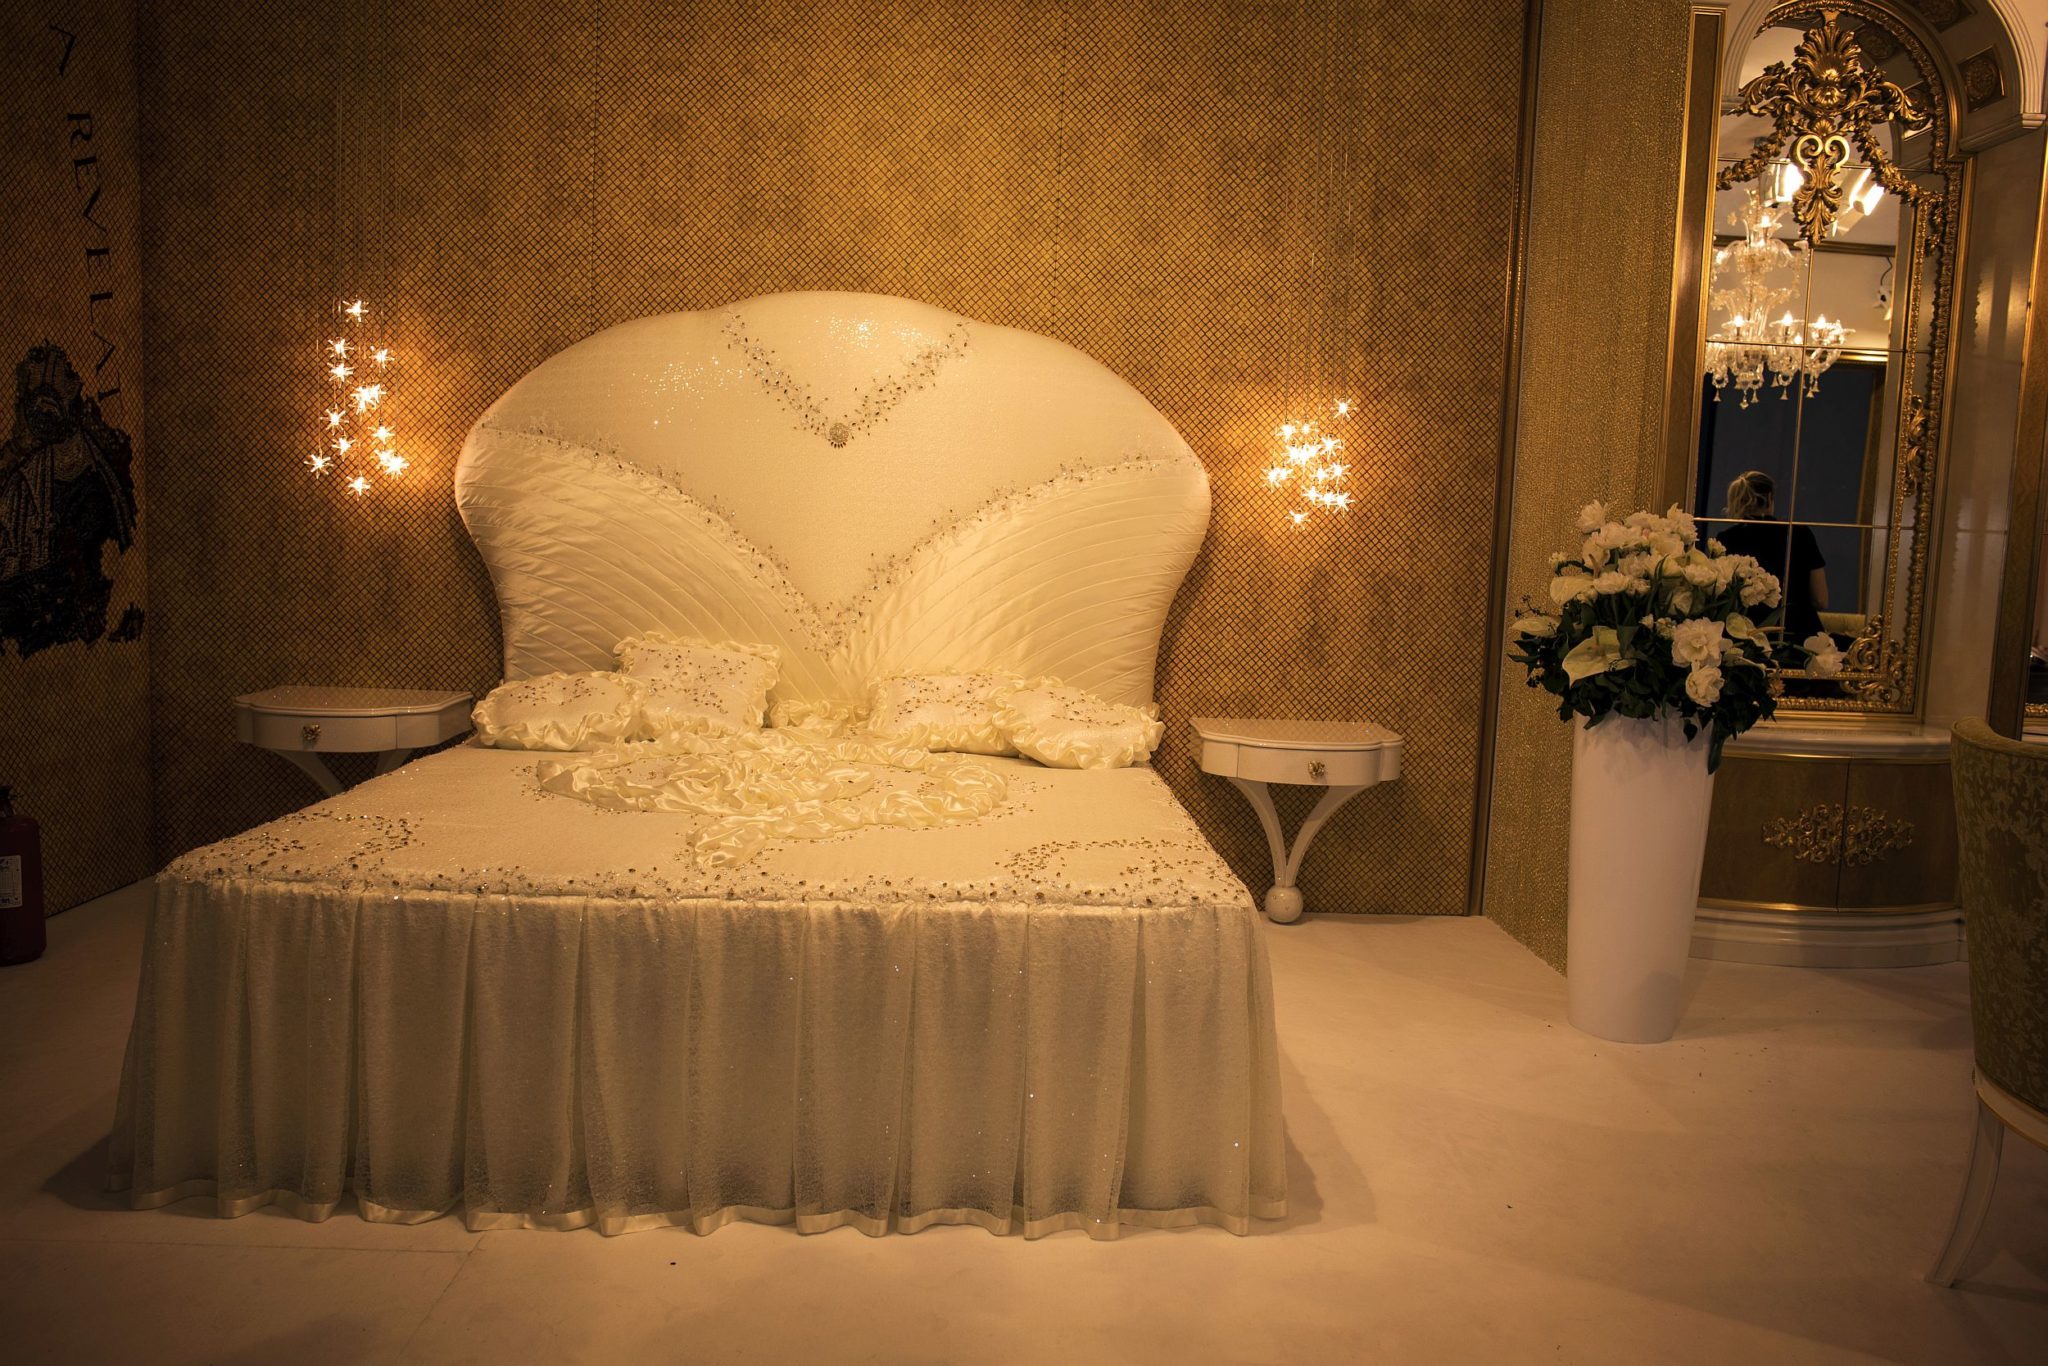 Sparkling-allure-of-bedside-pendants-creates-a-dreamy-and-lavish-bedroom